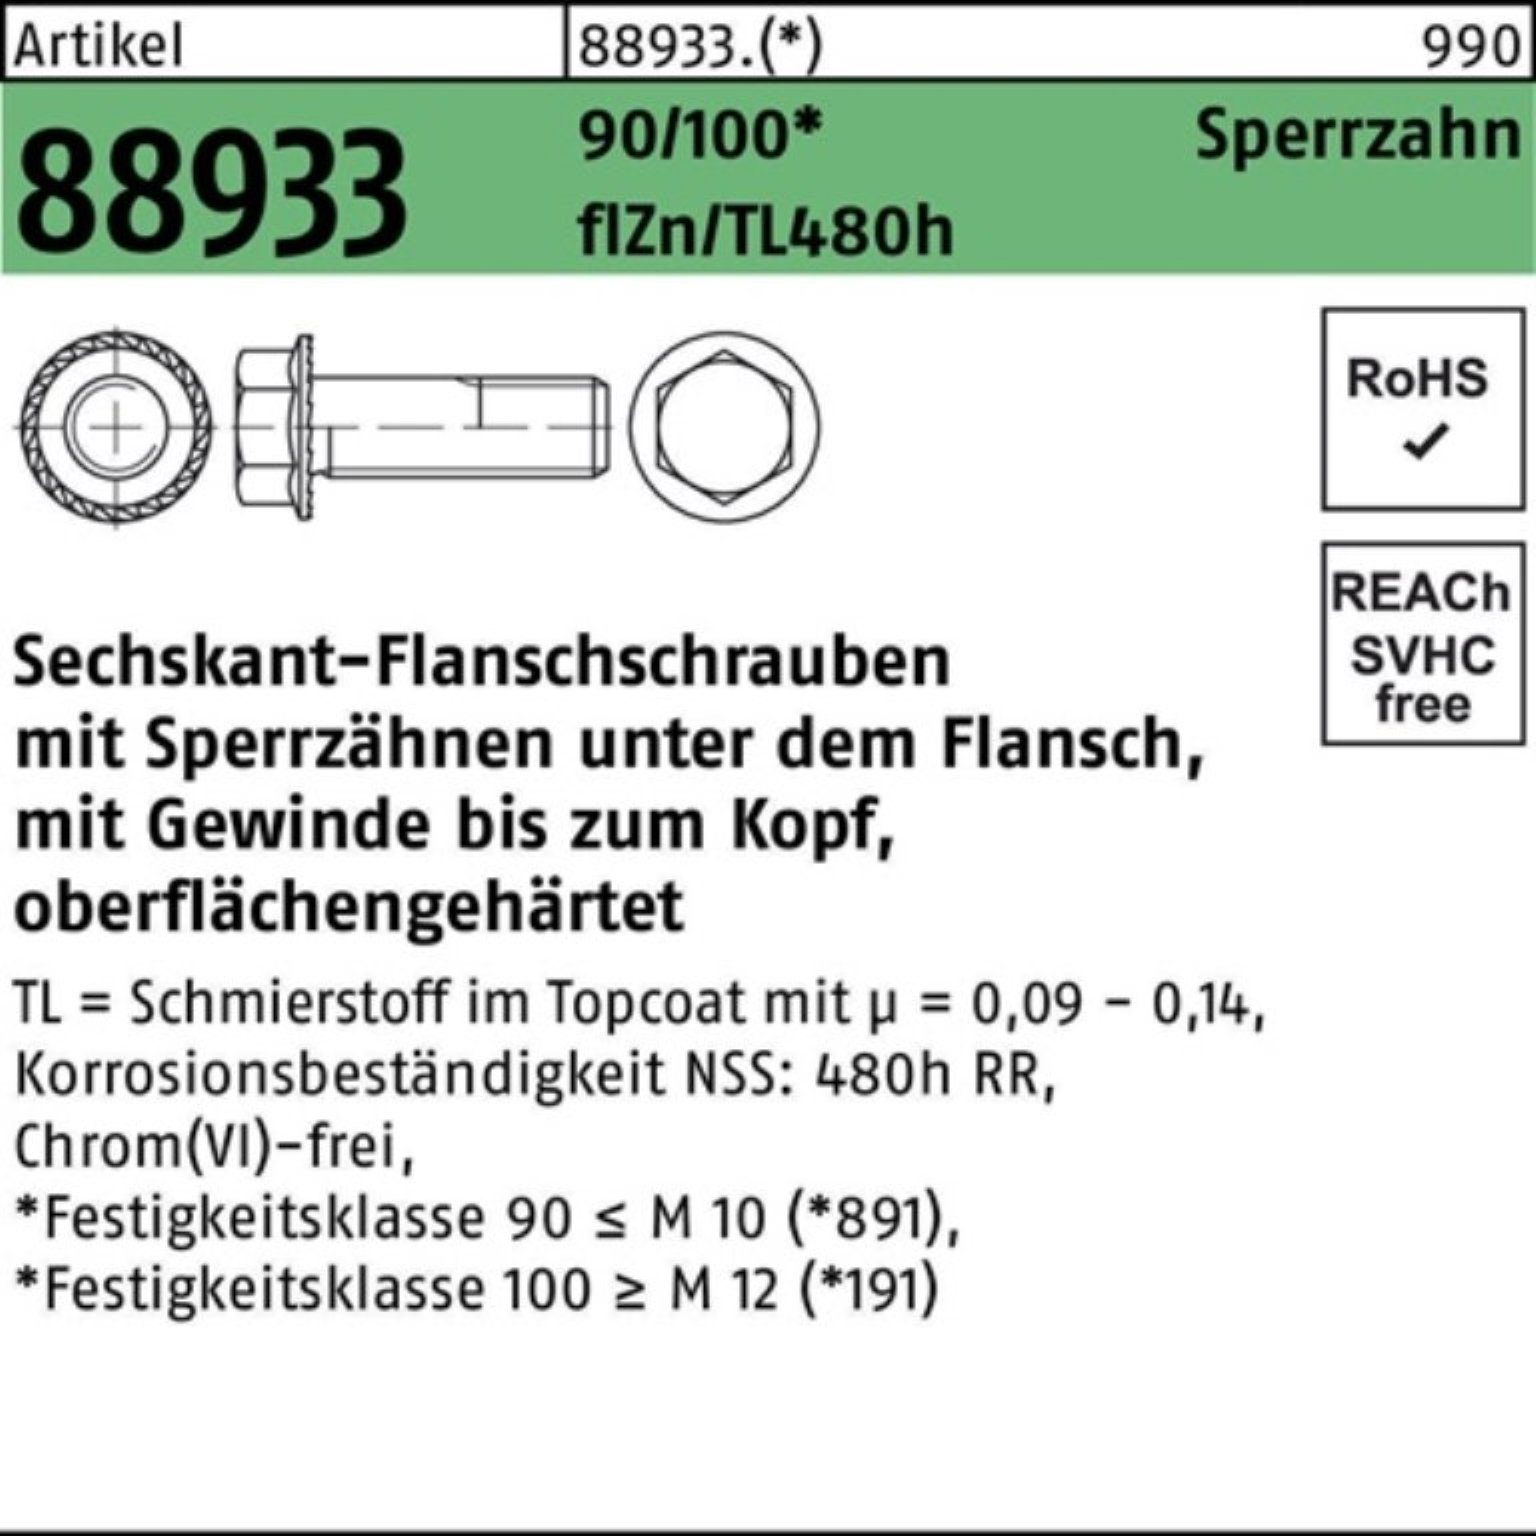 Reyher VG Pack Sechskantflanschschraube M6x25 R 90/100 500er Sperrz. Schraube 88933 fl